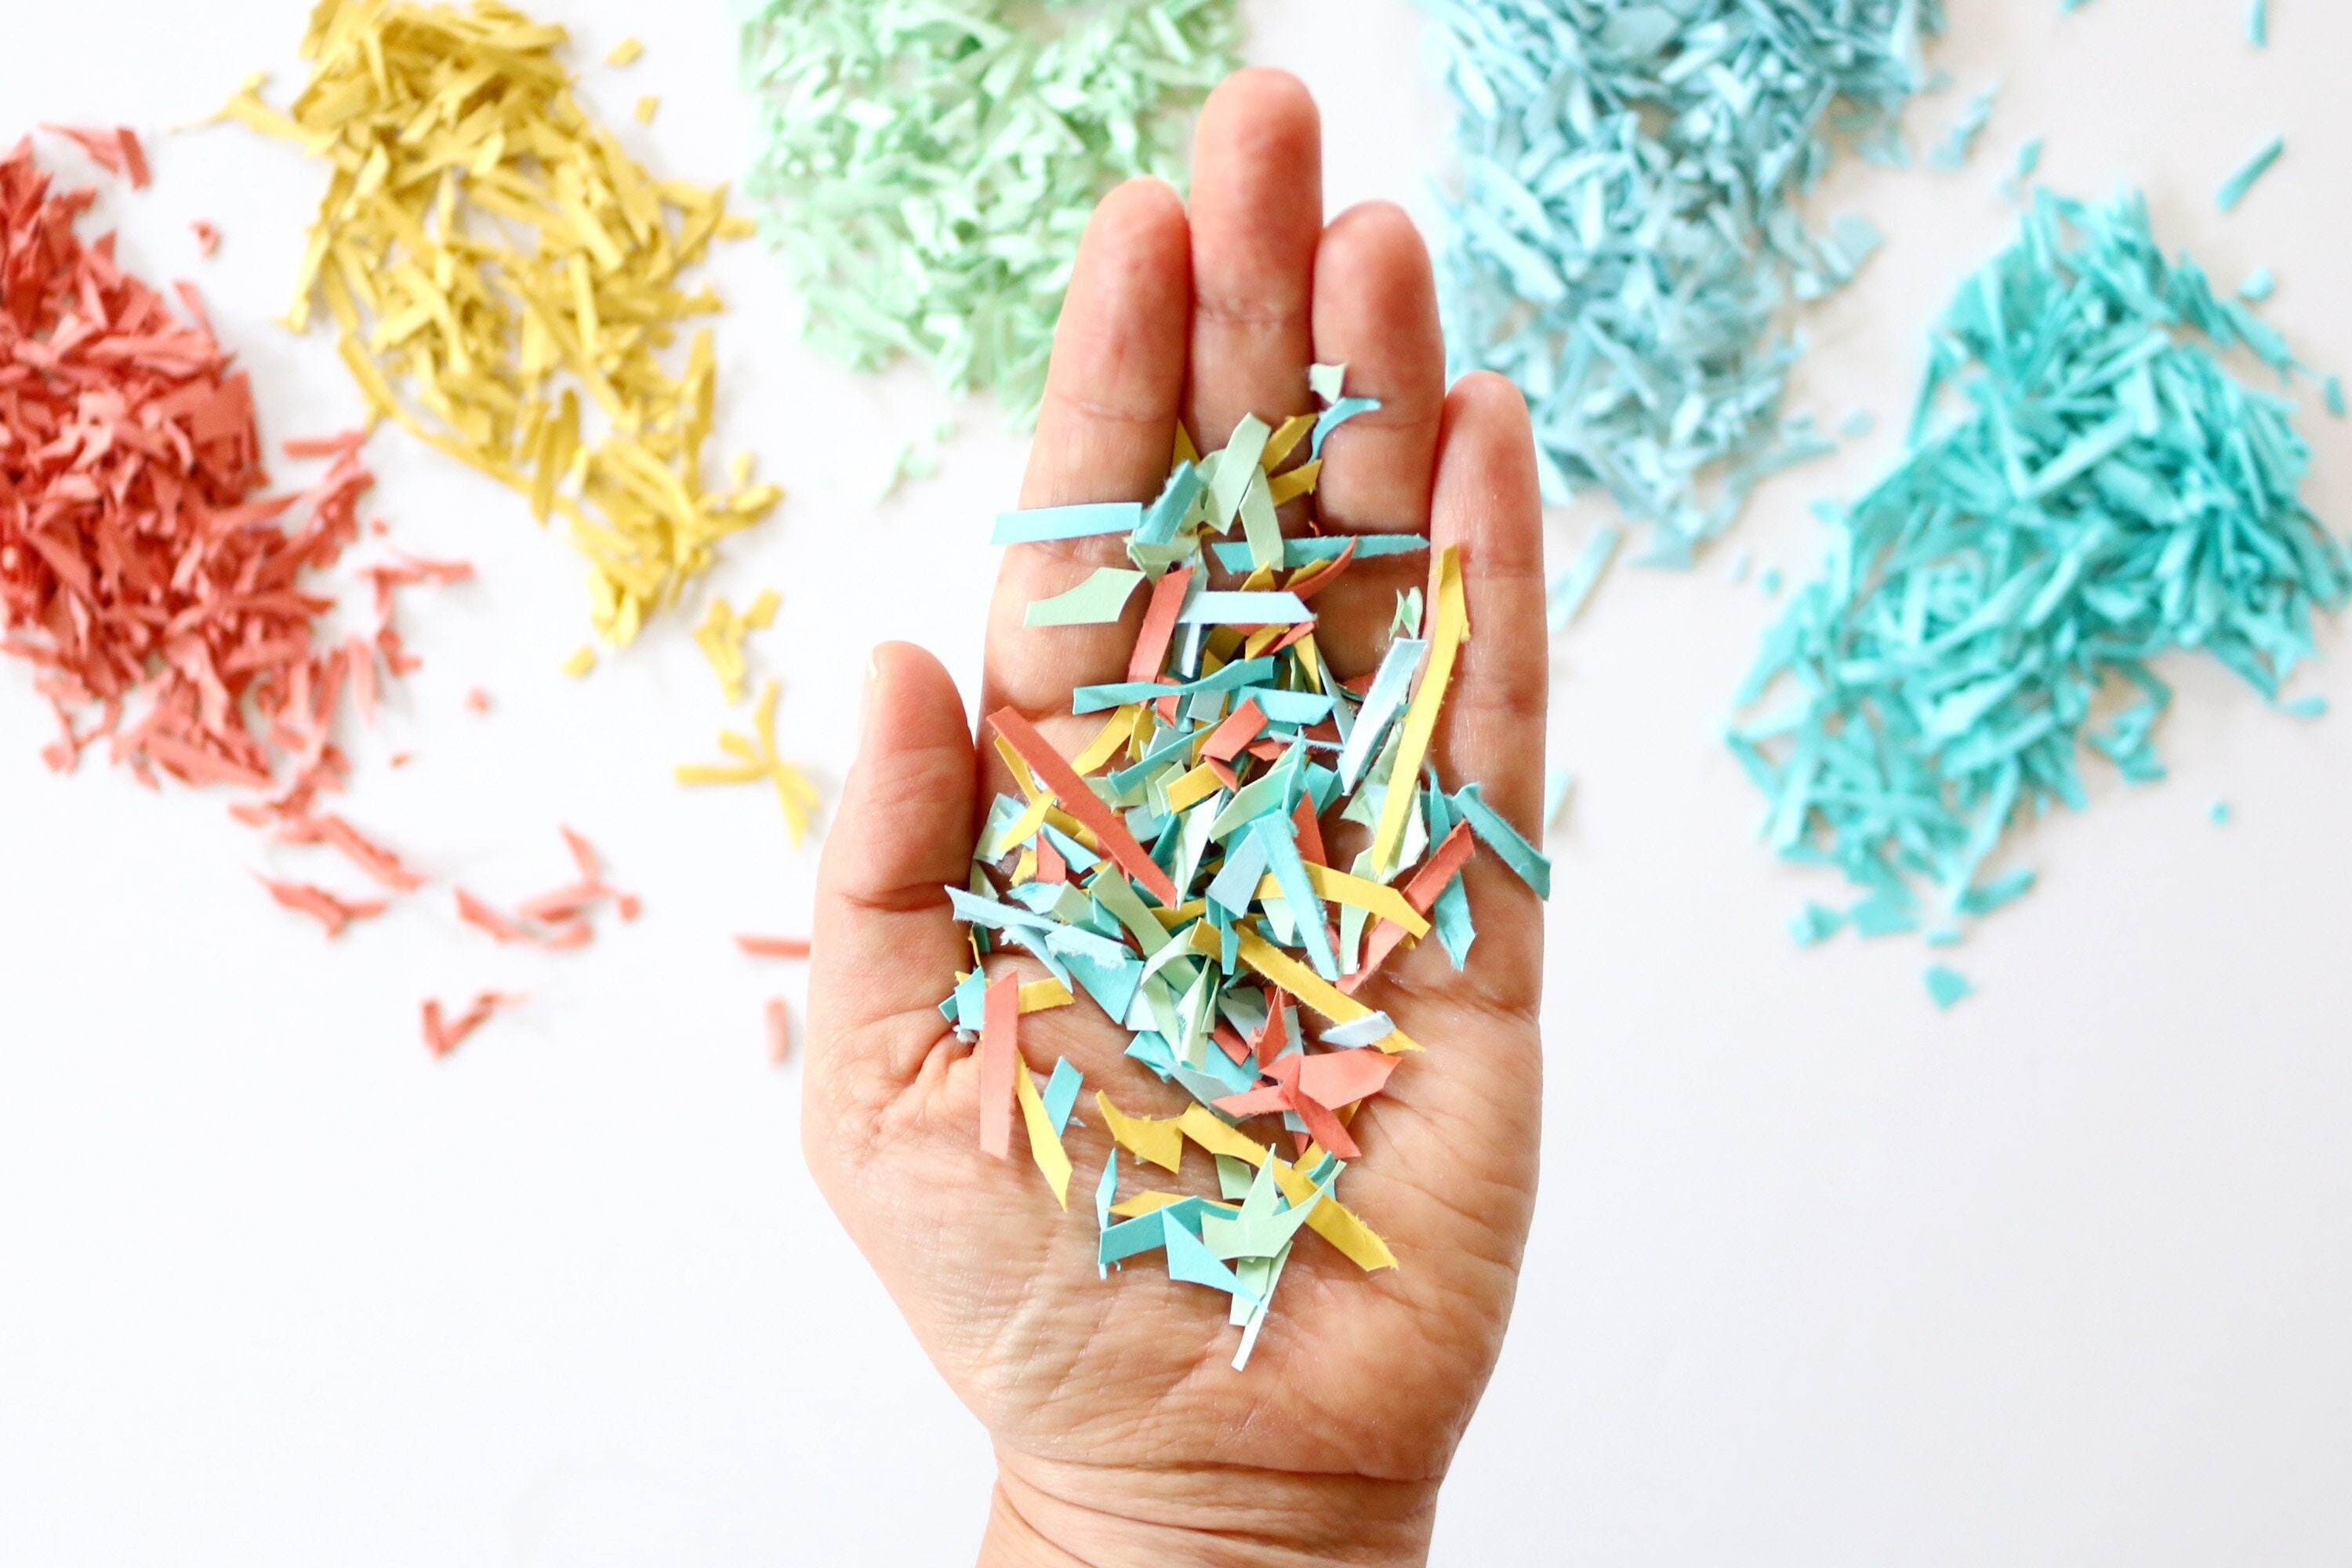 Paper Confetti Custom Colors Colorful Paper Shreds for Table Decor